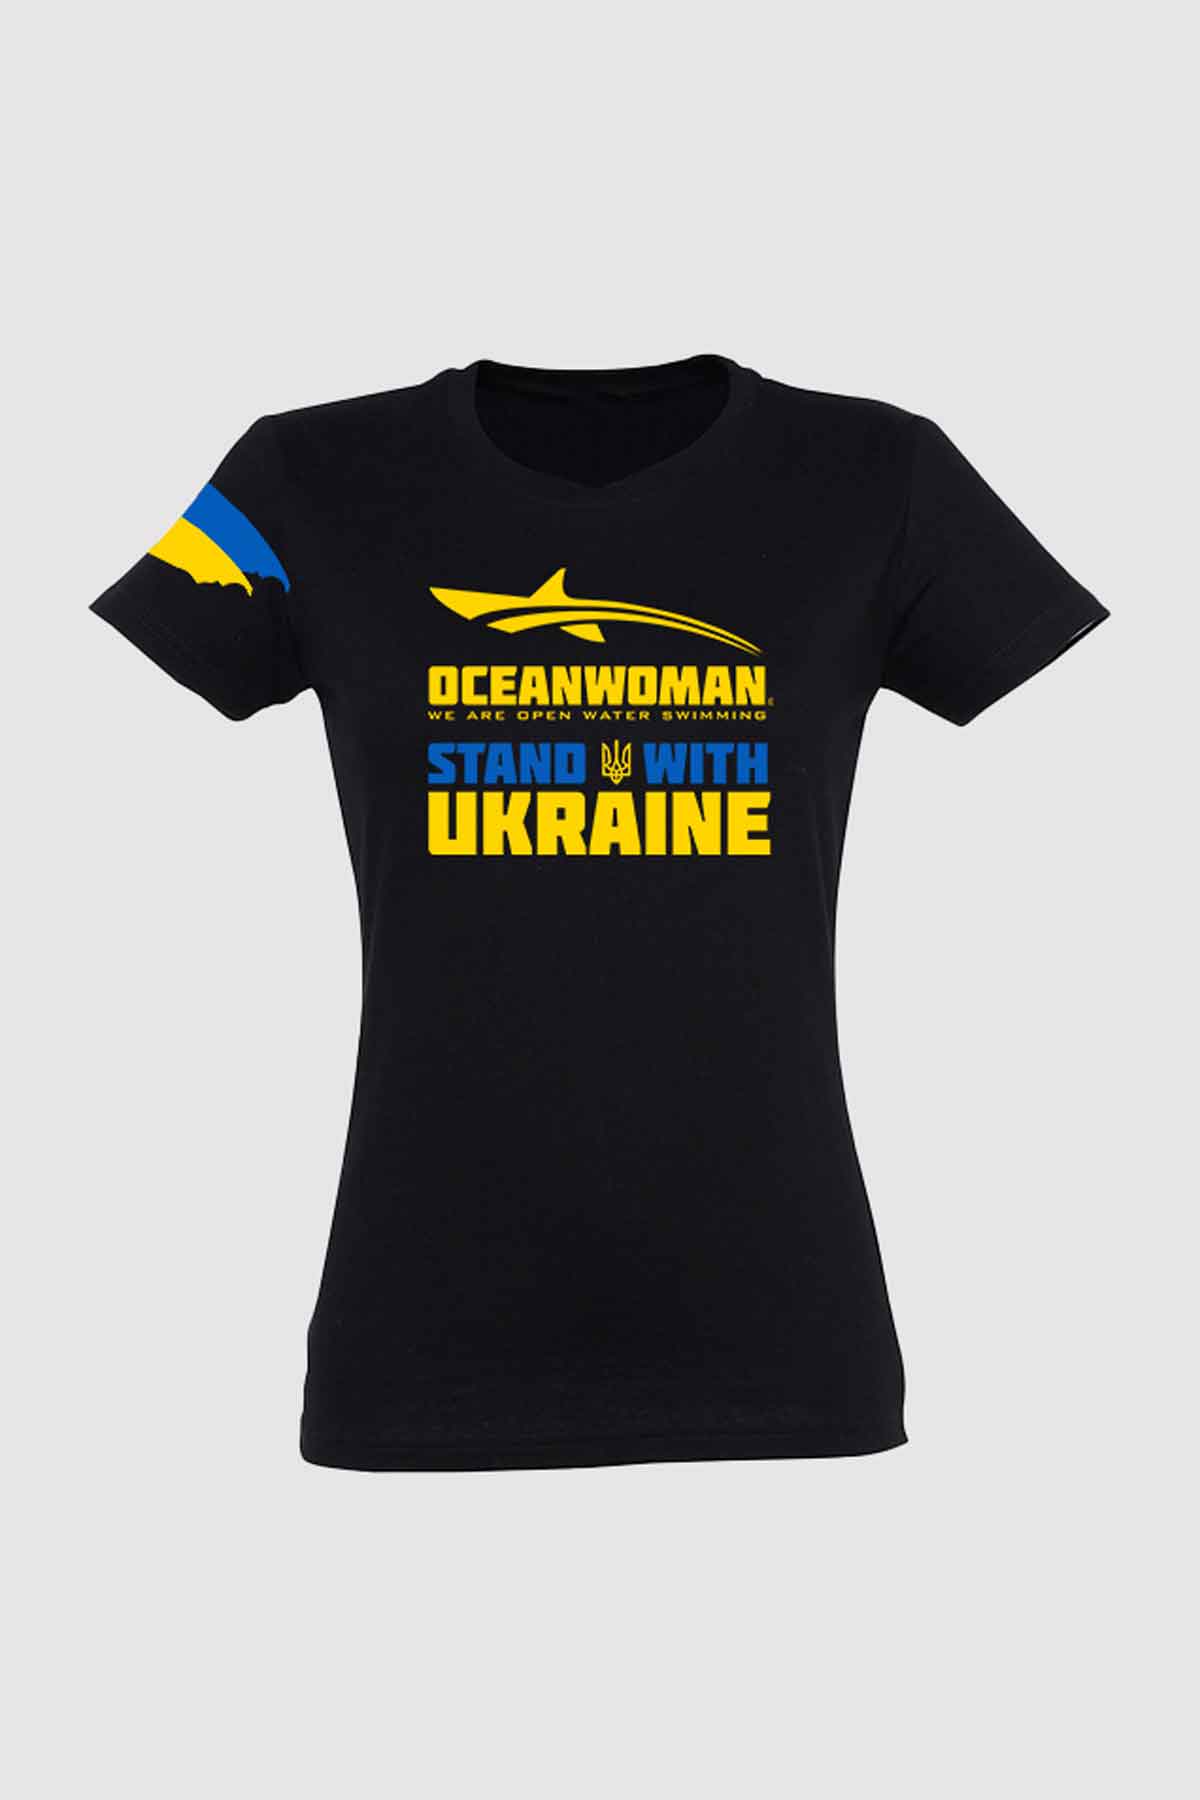 Oceanwoman black t shirt stand with ukraine